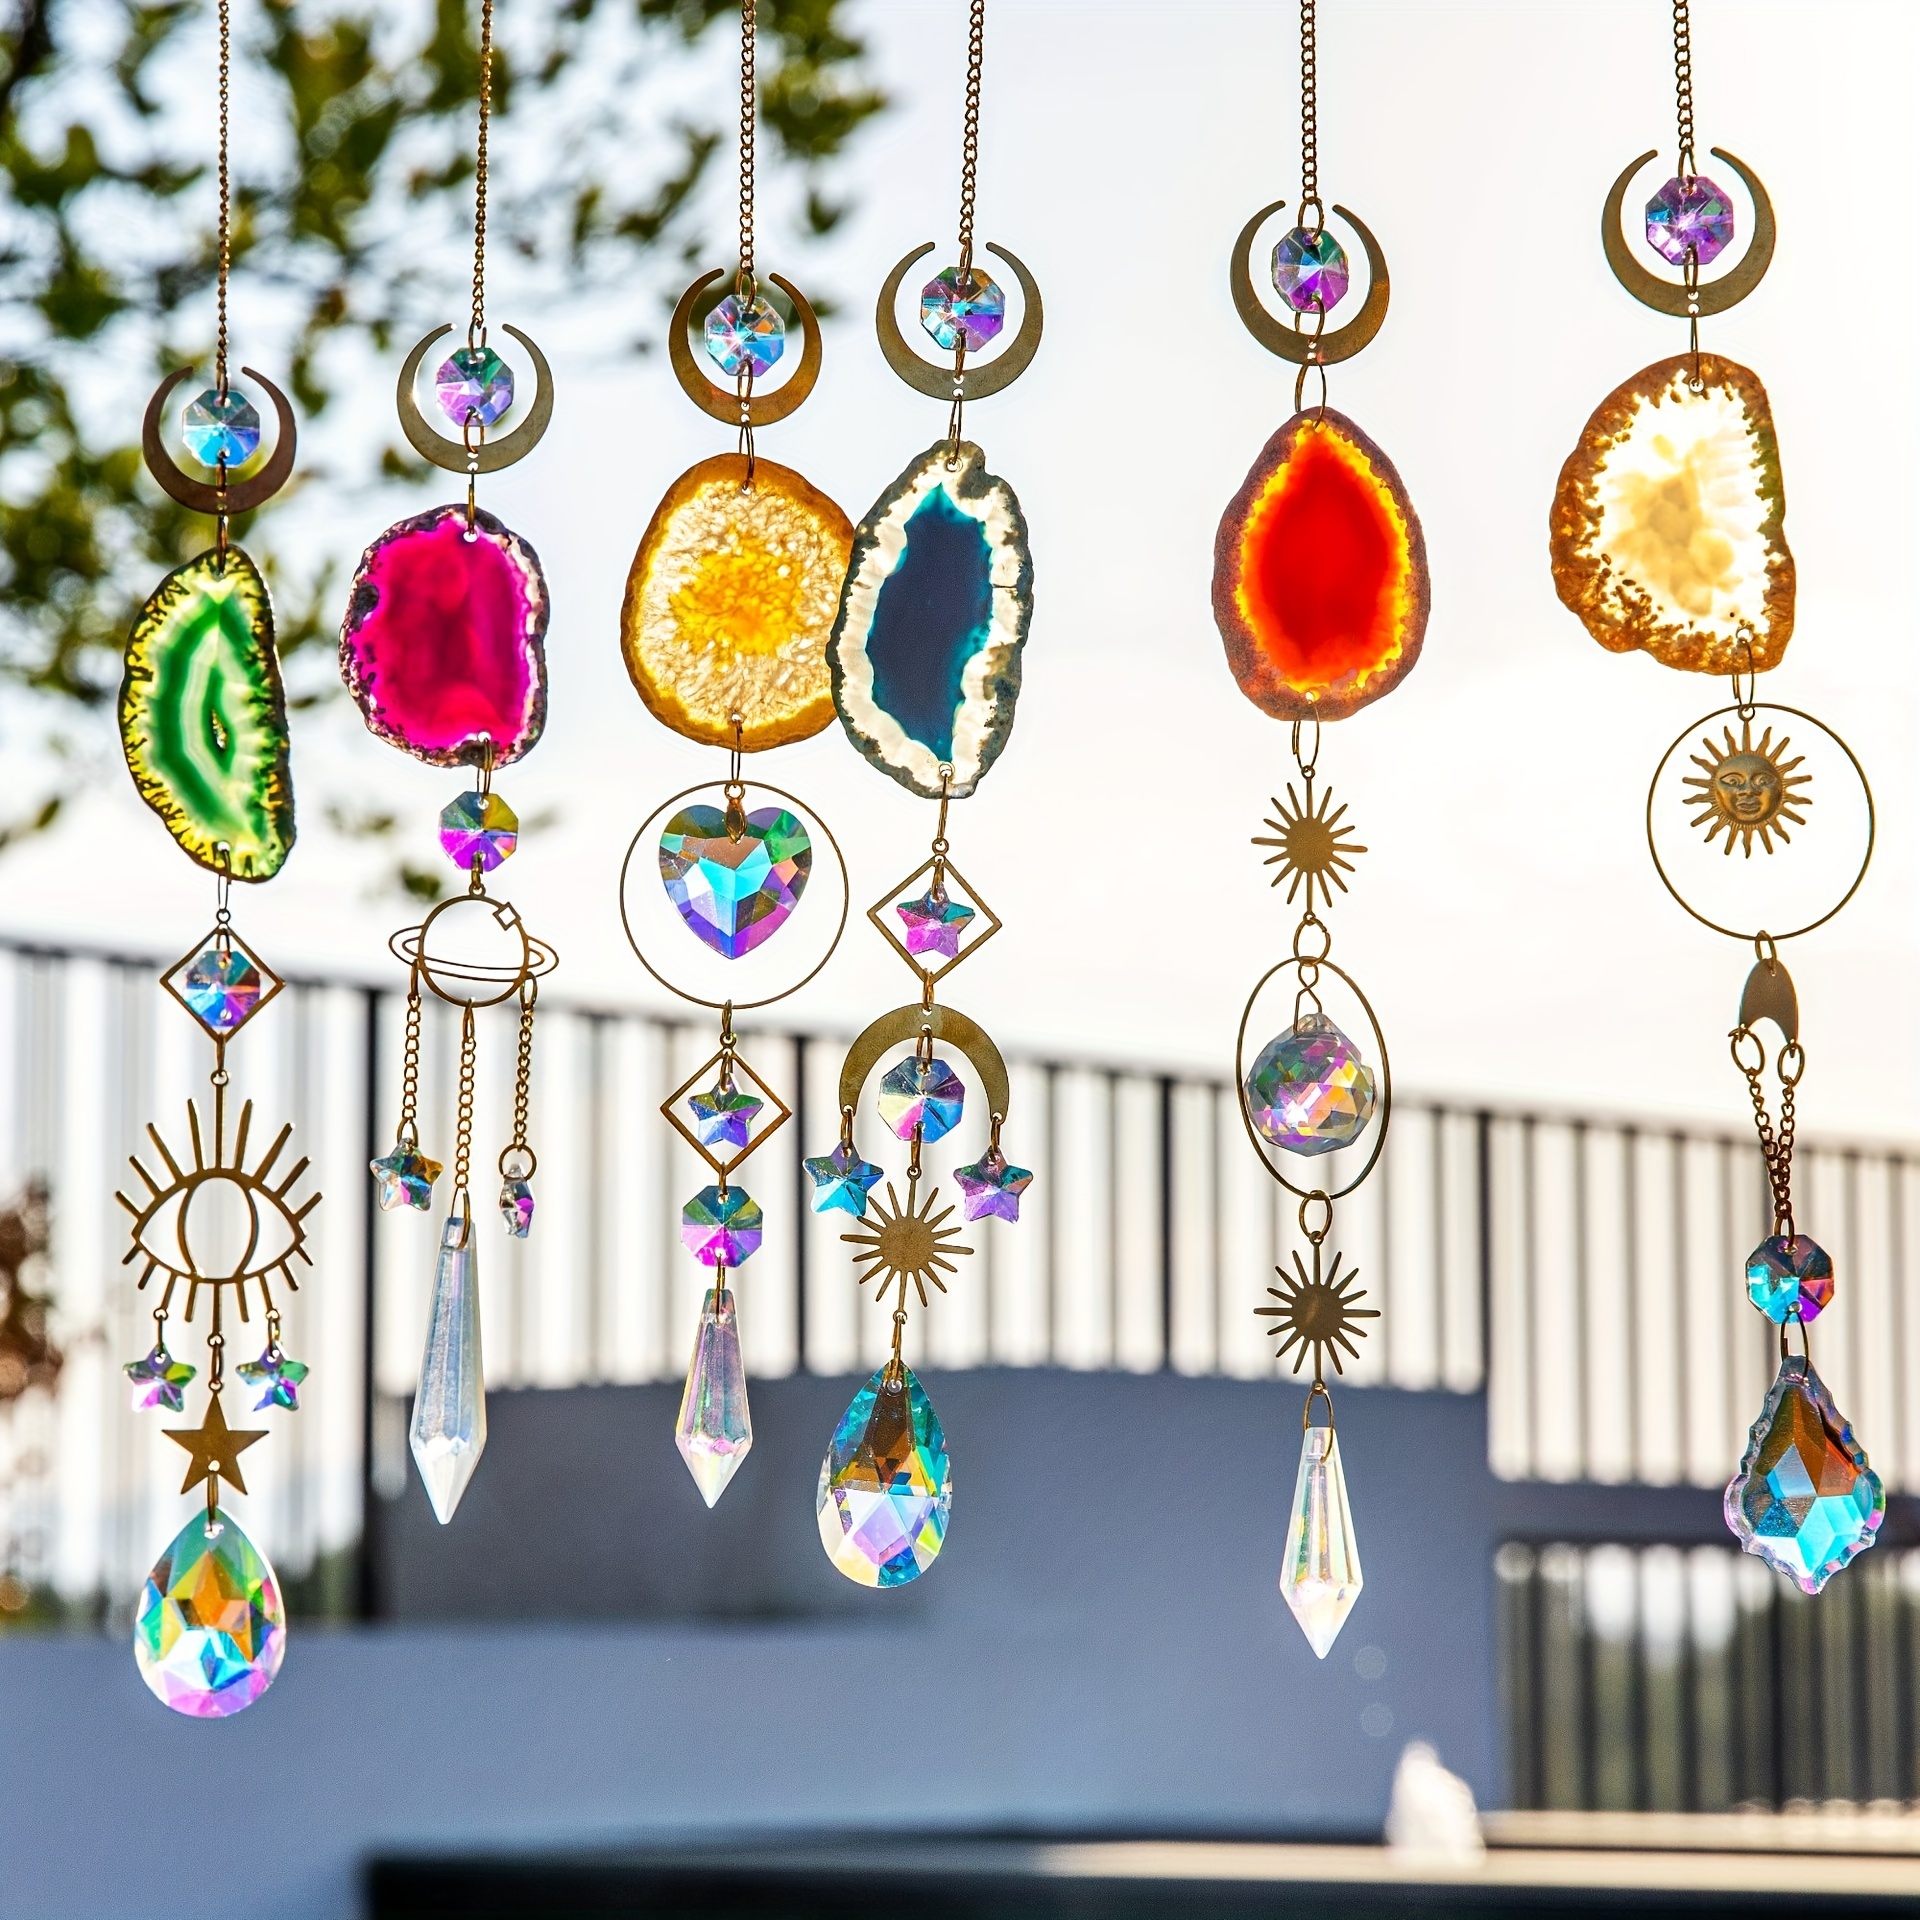 Attrape-soleil suspendu en cristal de lustre – The Sun Catcher Store